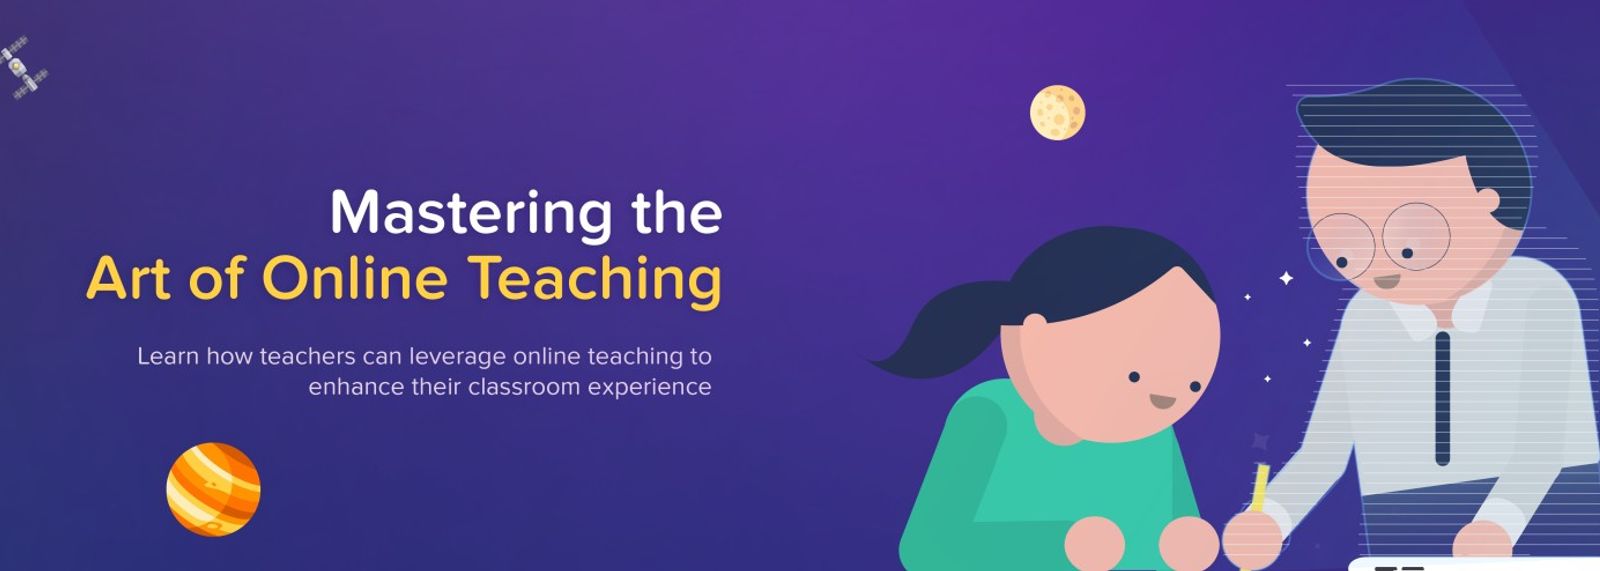 Mastering the Art of Online Teaching